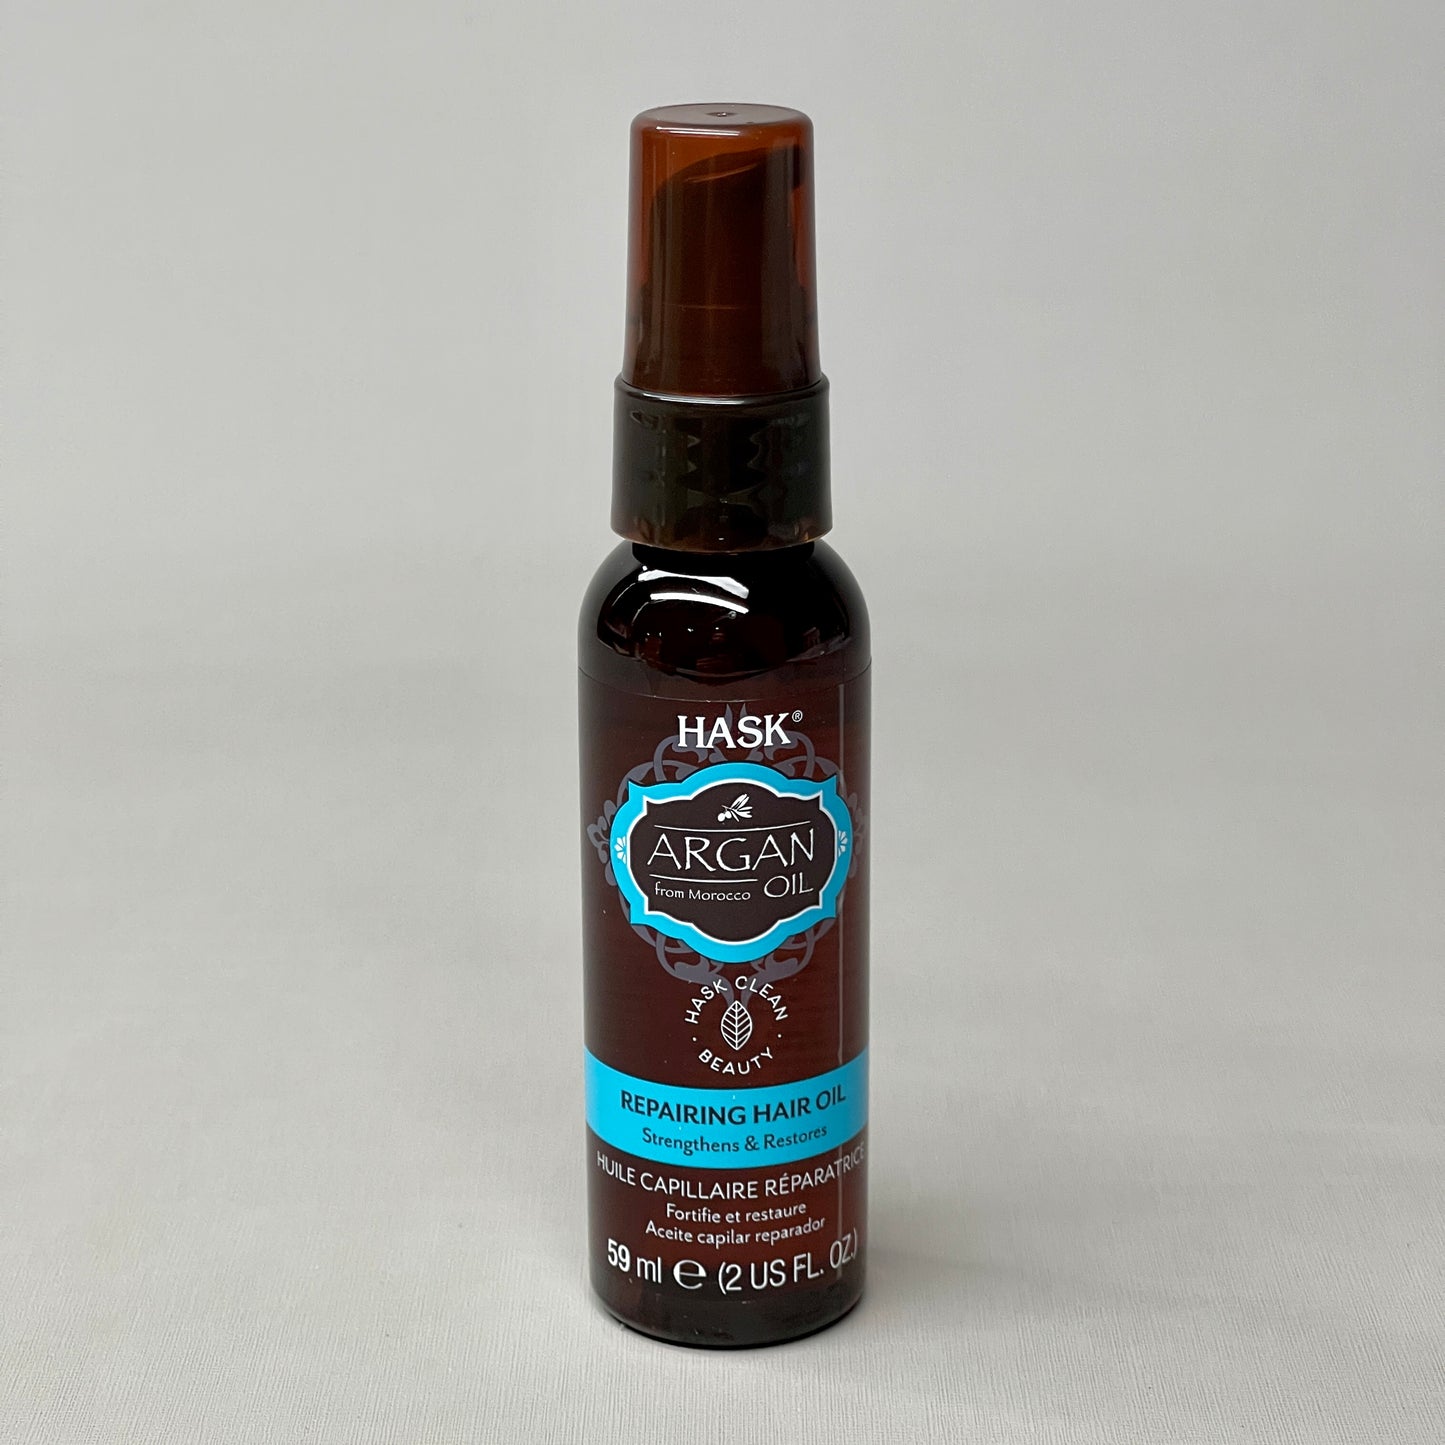 HASK Argan Shine Oil from Morocco Repairing Hair Oil 2 oz 31316D (New)